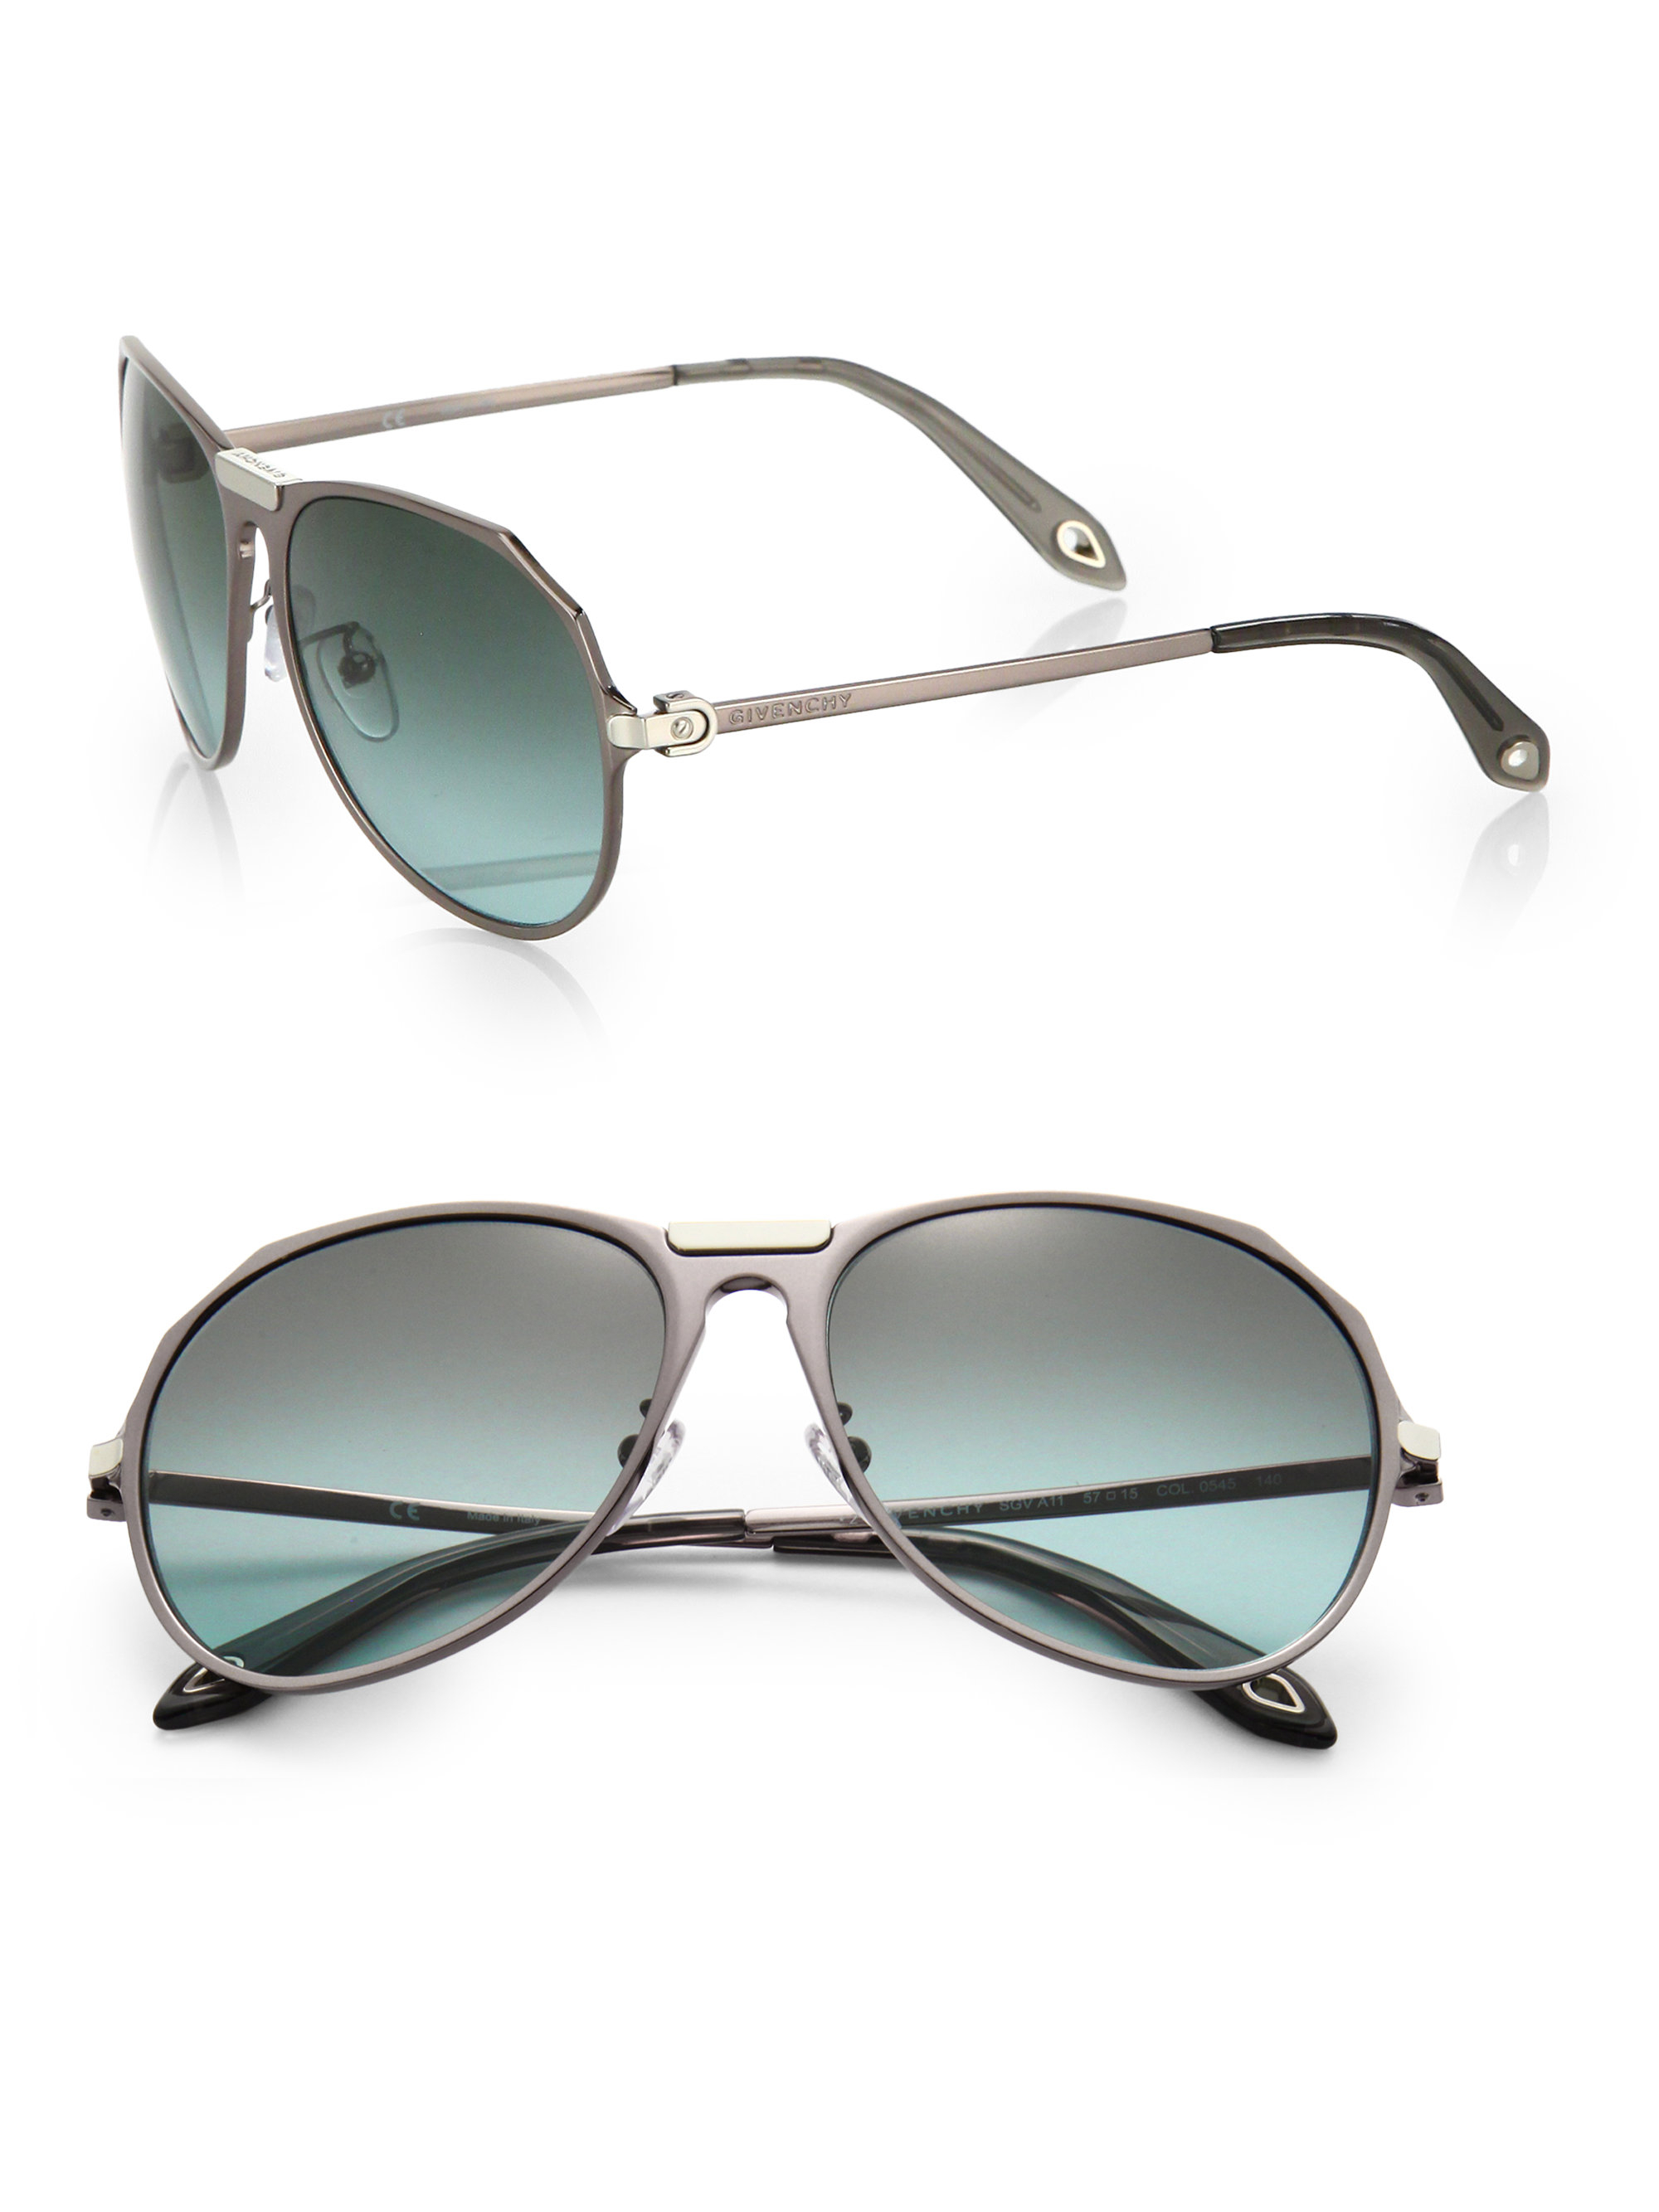 givenchy sunglasses 2014